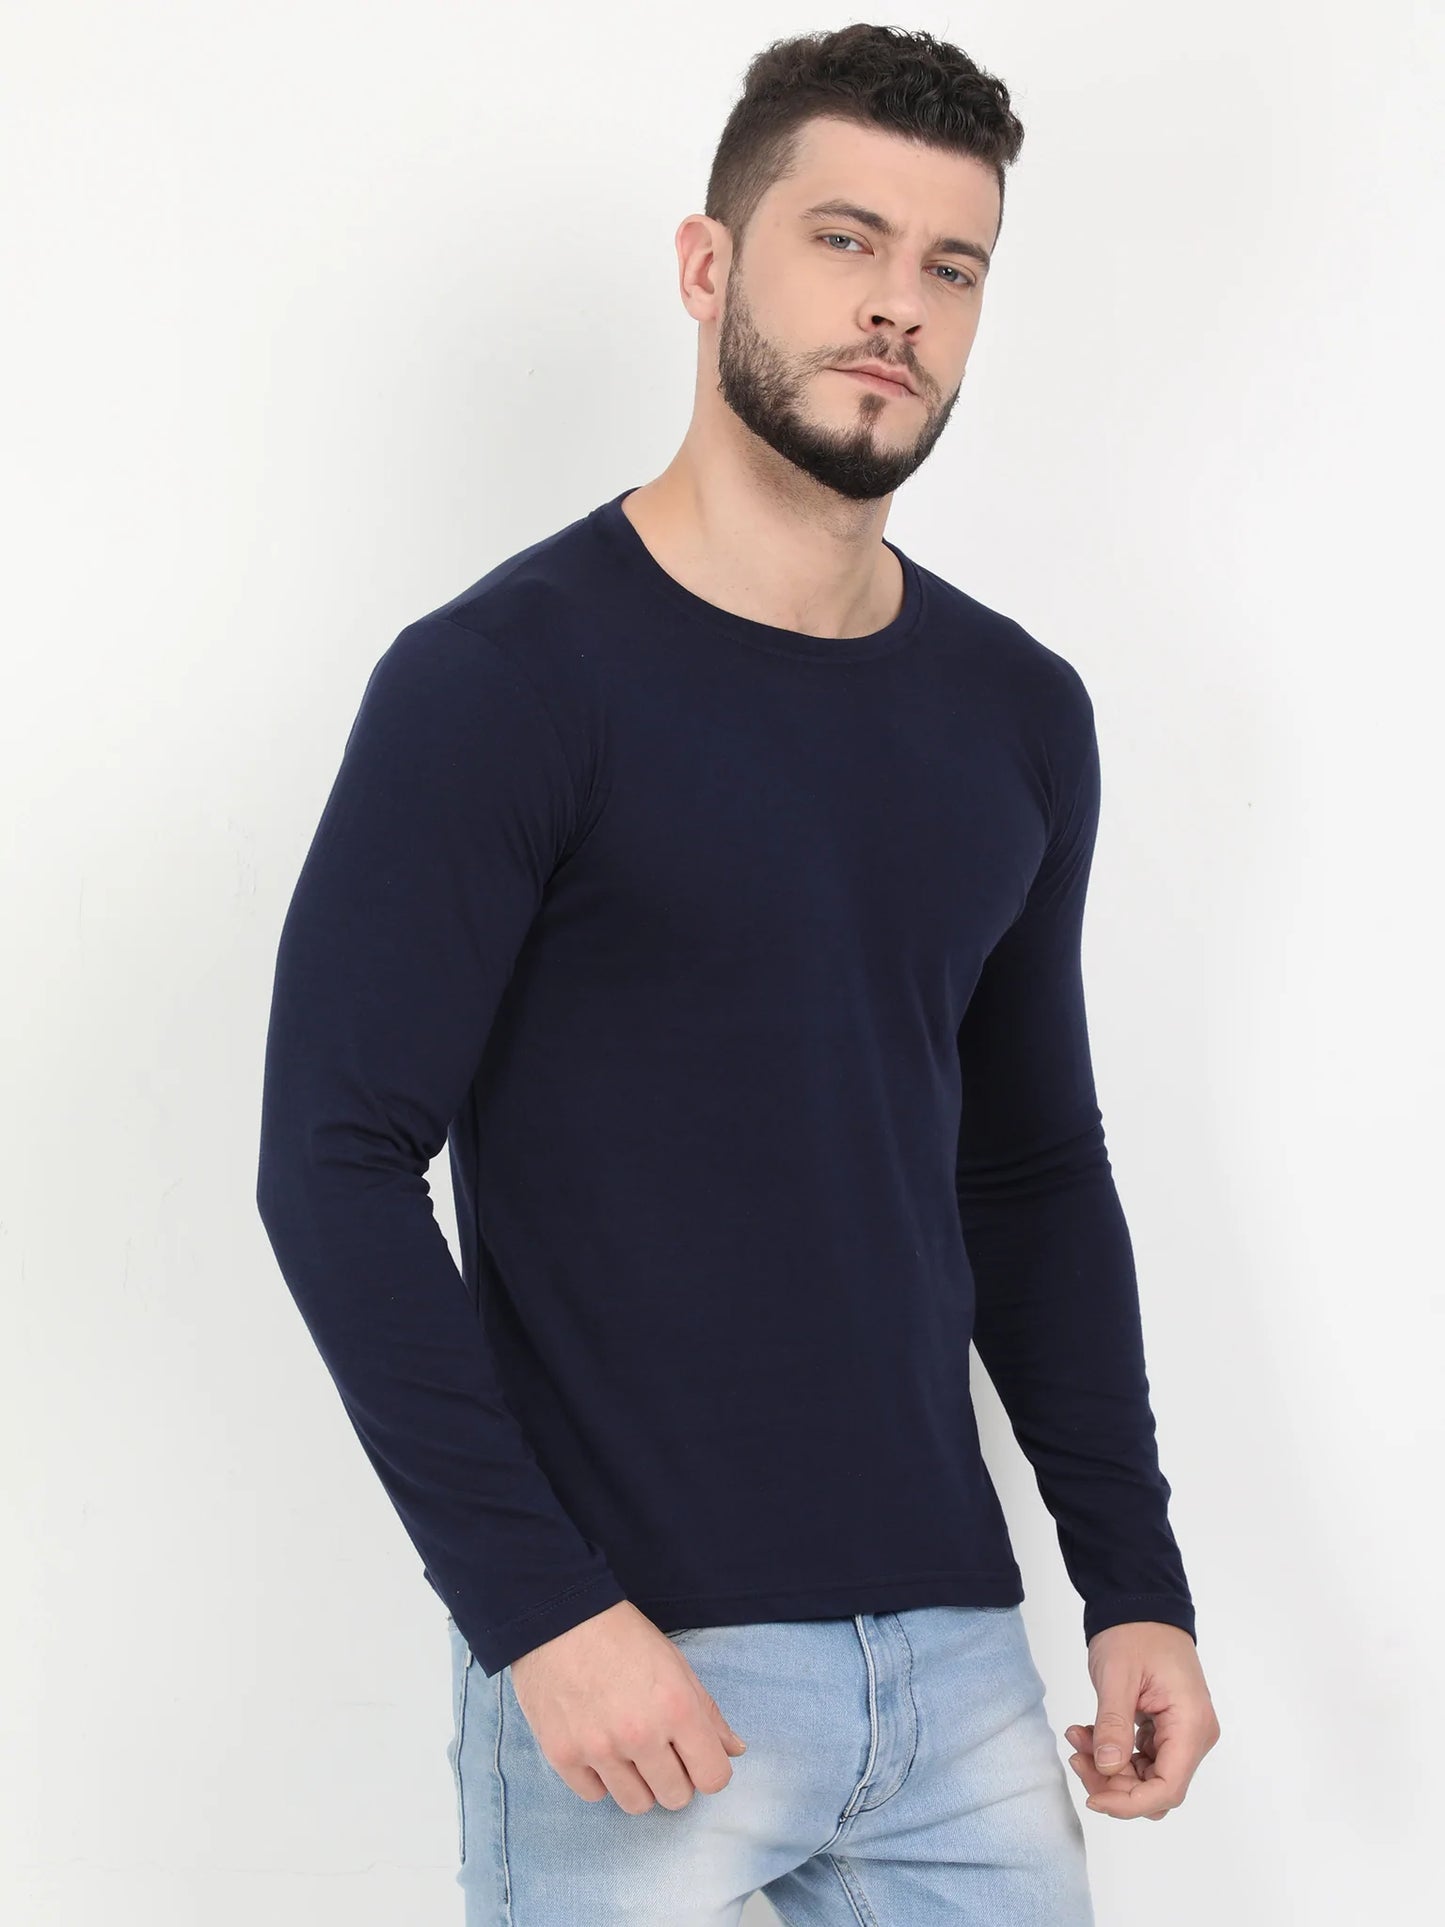 Men's Cotton Plain Round Neck Full Sleeve Navy Blue Color T-Shirt